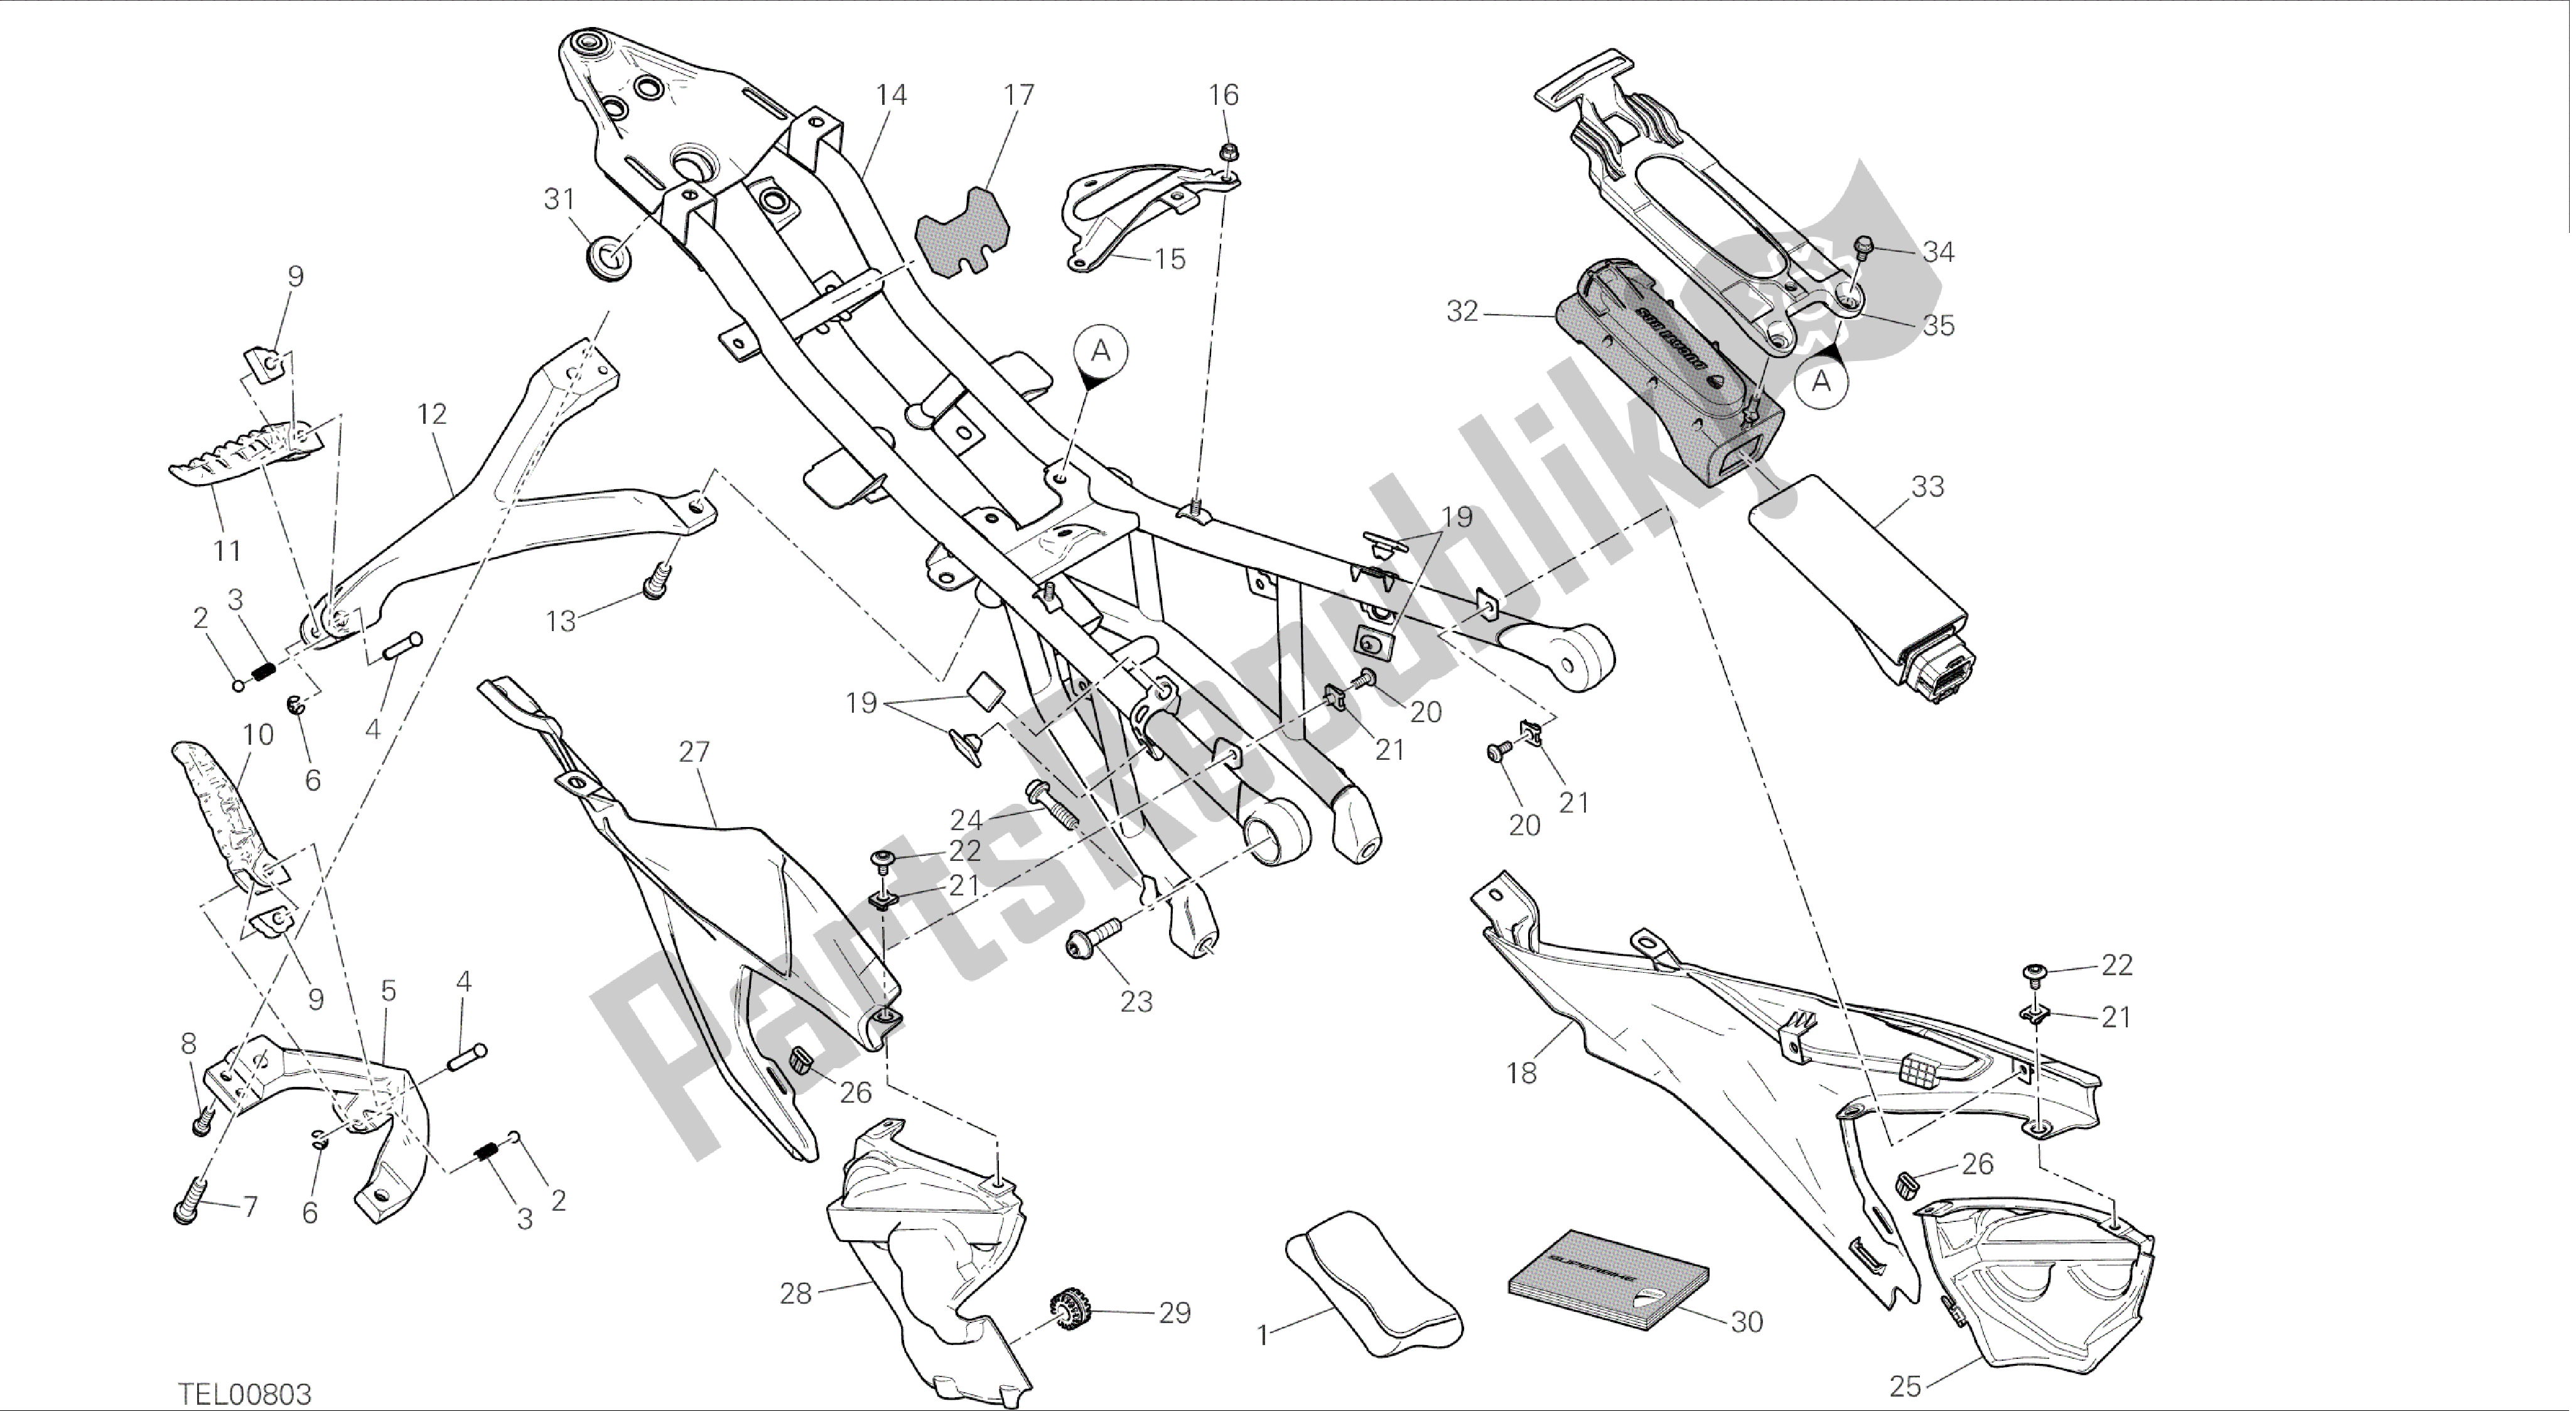 Alle onderdelen voor de Tekening 027 - Achterframe Comp. [mod: 899 Abs; Xst: Aus, Eur, Fra, Jap, Twn] Groepsframe van de Ducati Panigale 899 2014